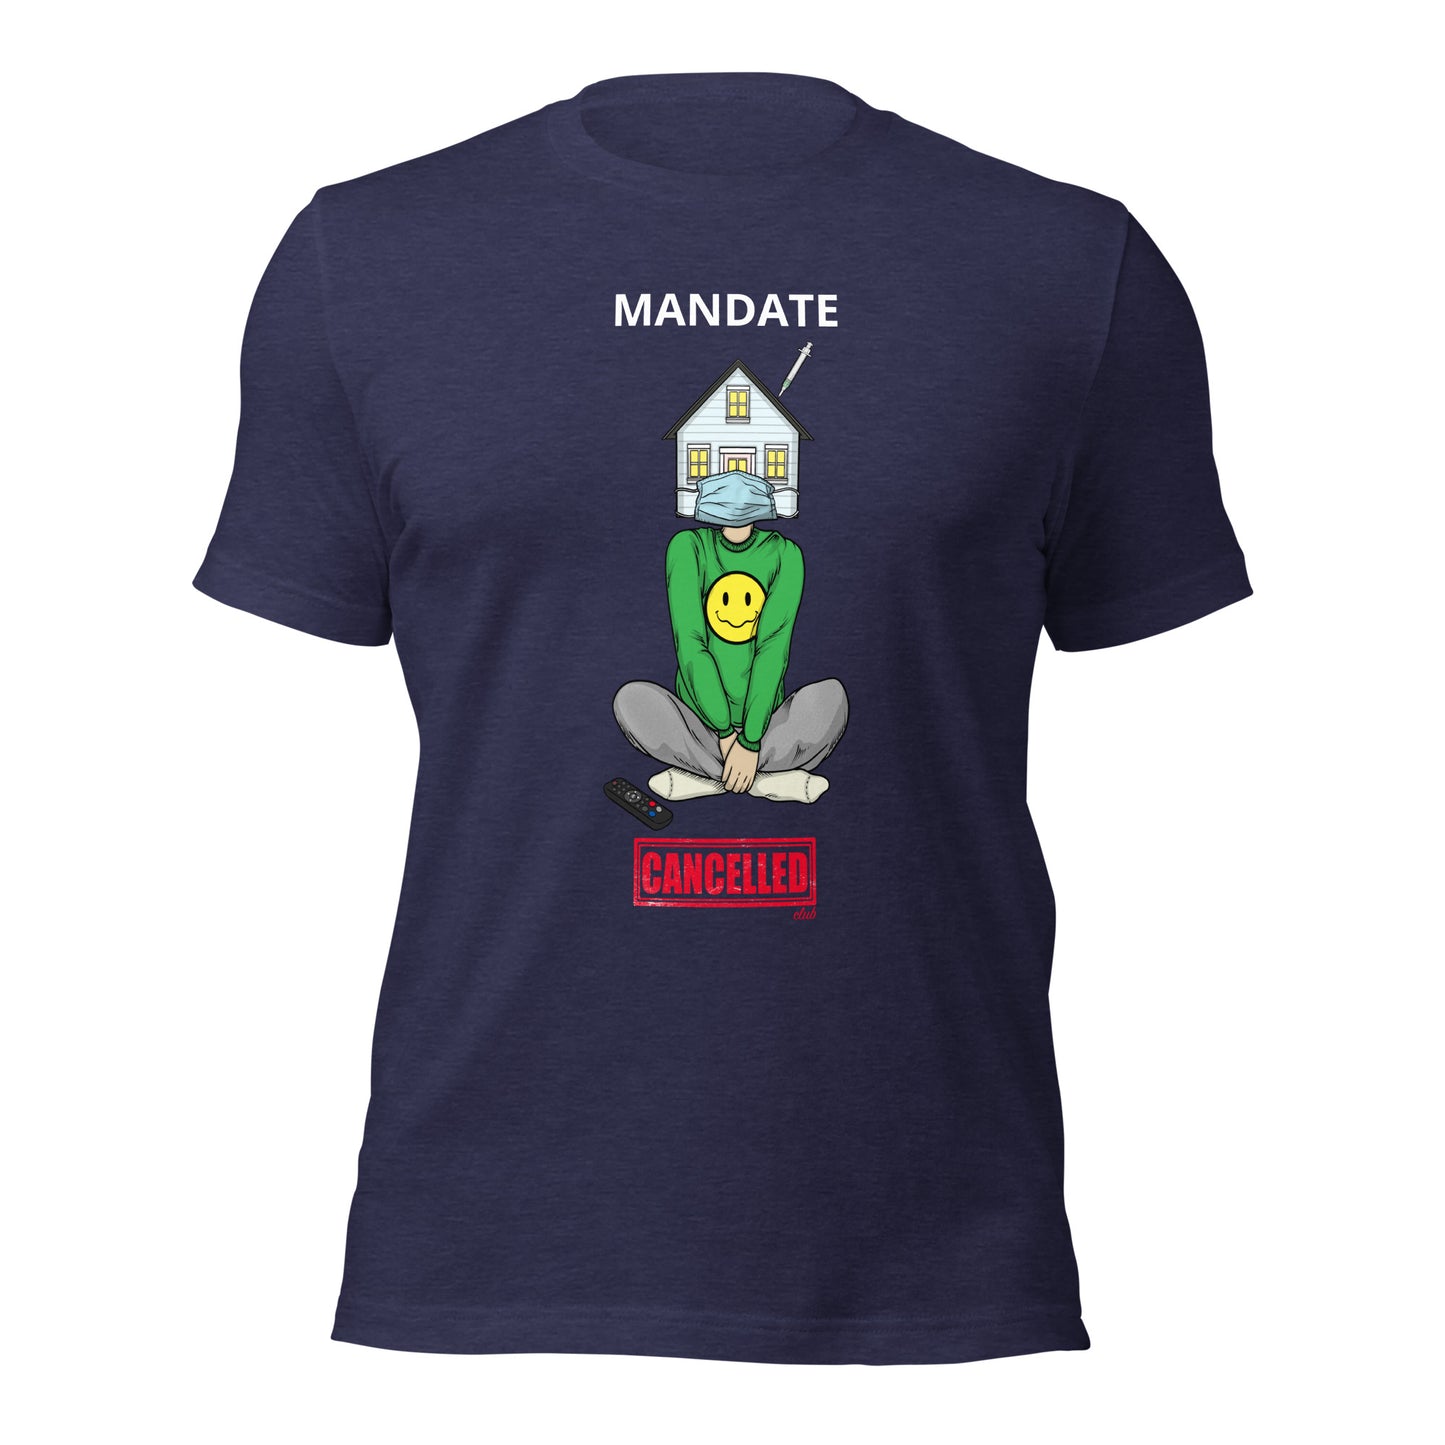 Unisex t-shirt - Mandate